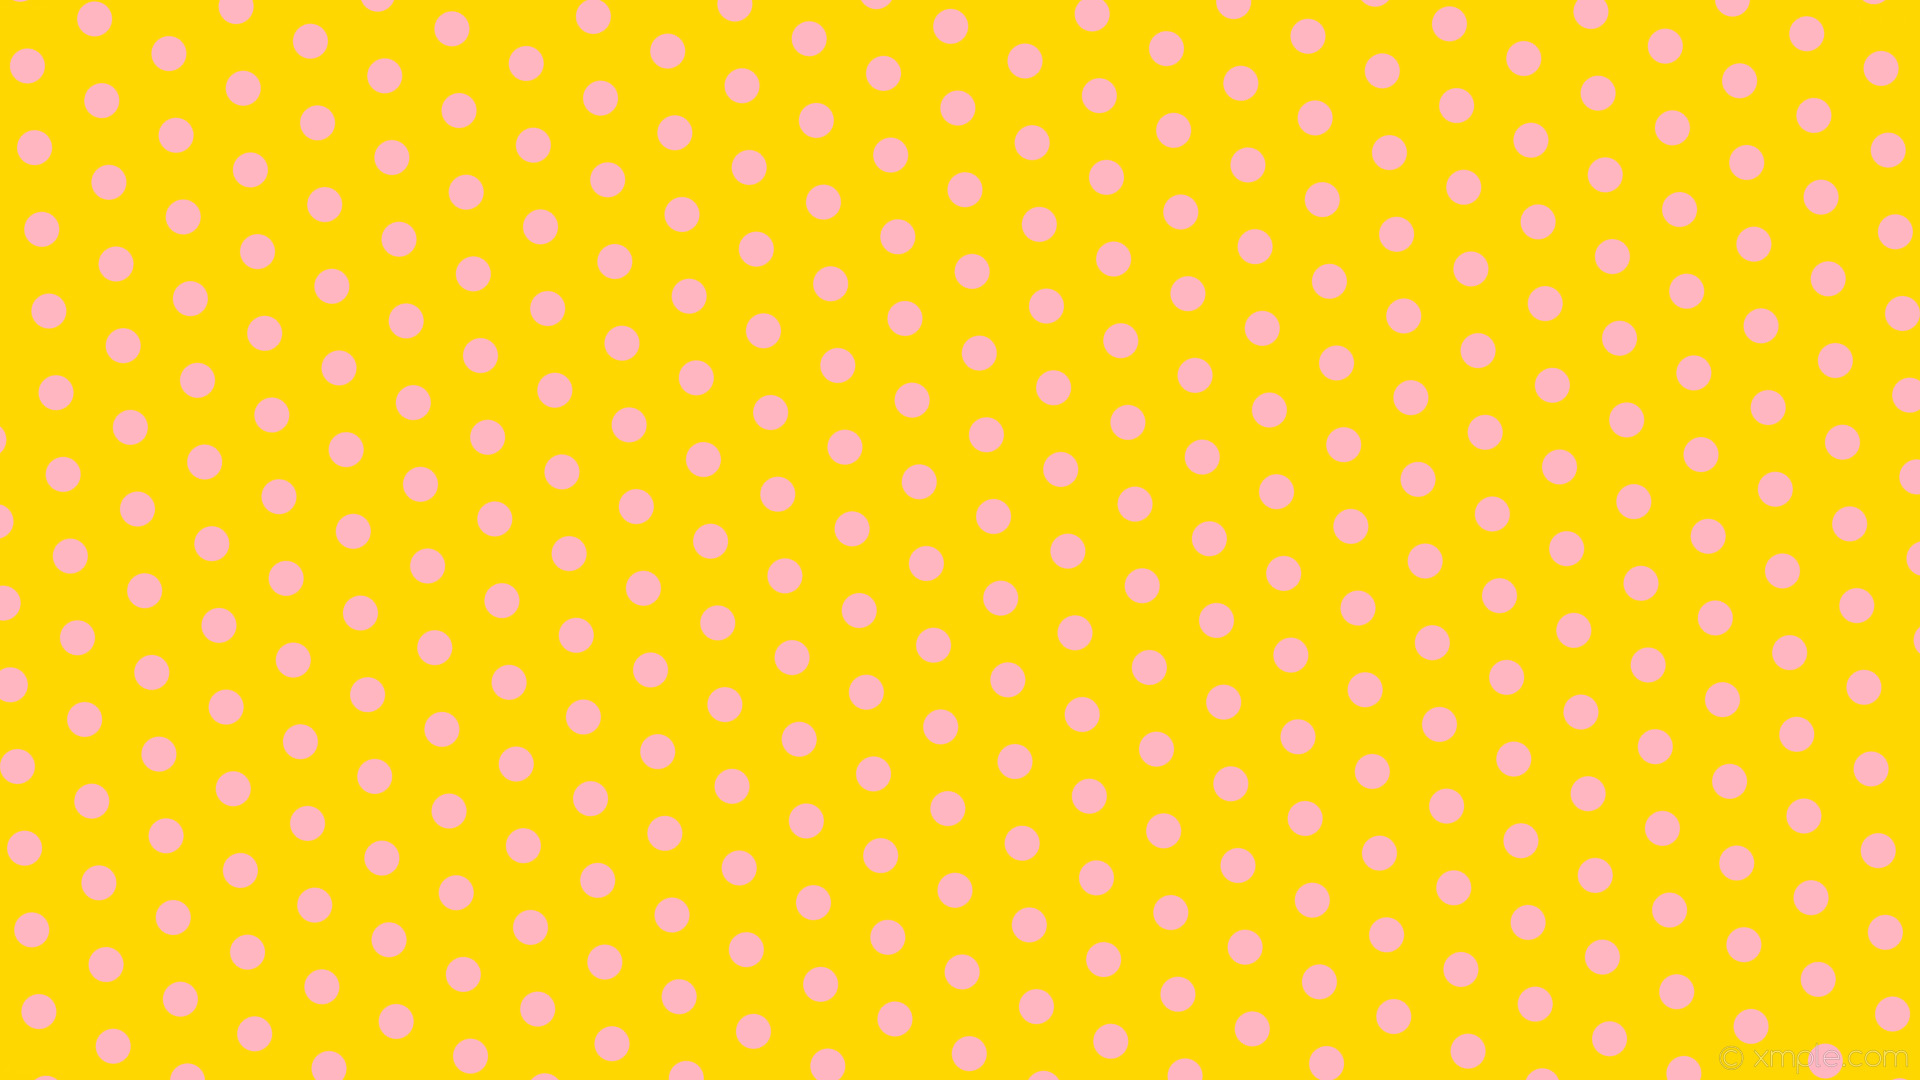 1920x1080 wallpaper polka dots hexagon pink yellow gold light pink #ffd700 #ffb6c1  diagonal 35Â°